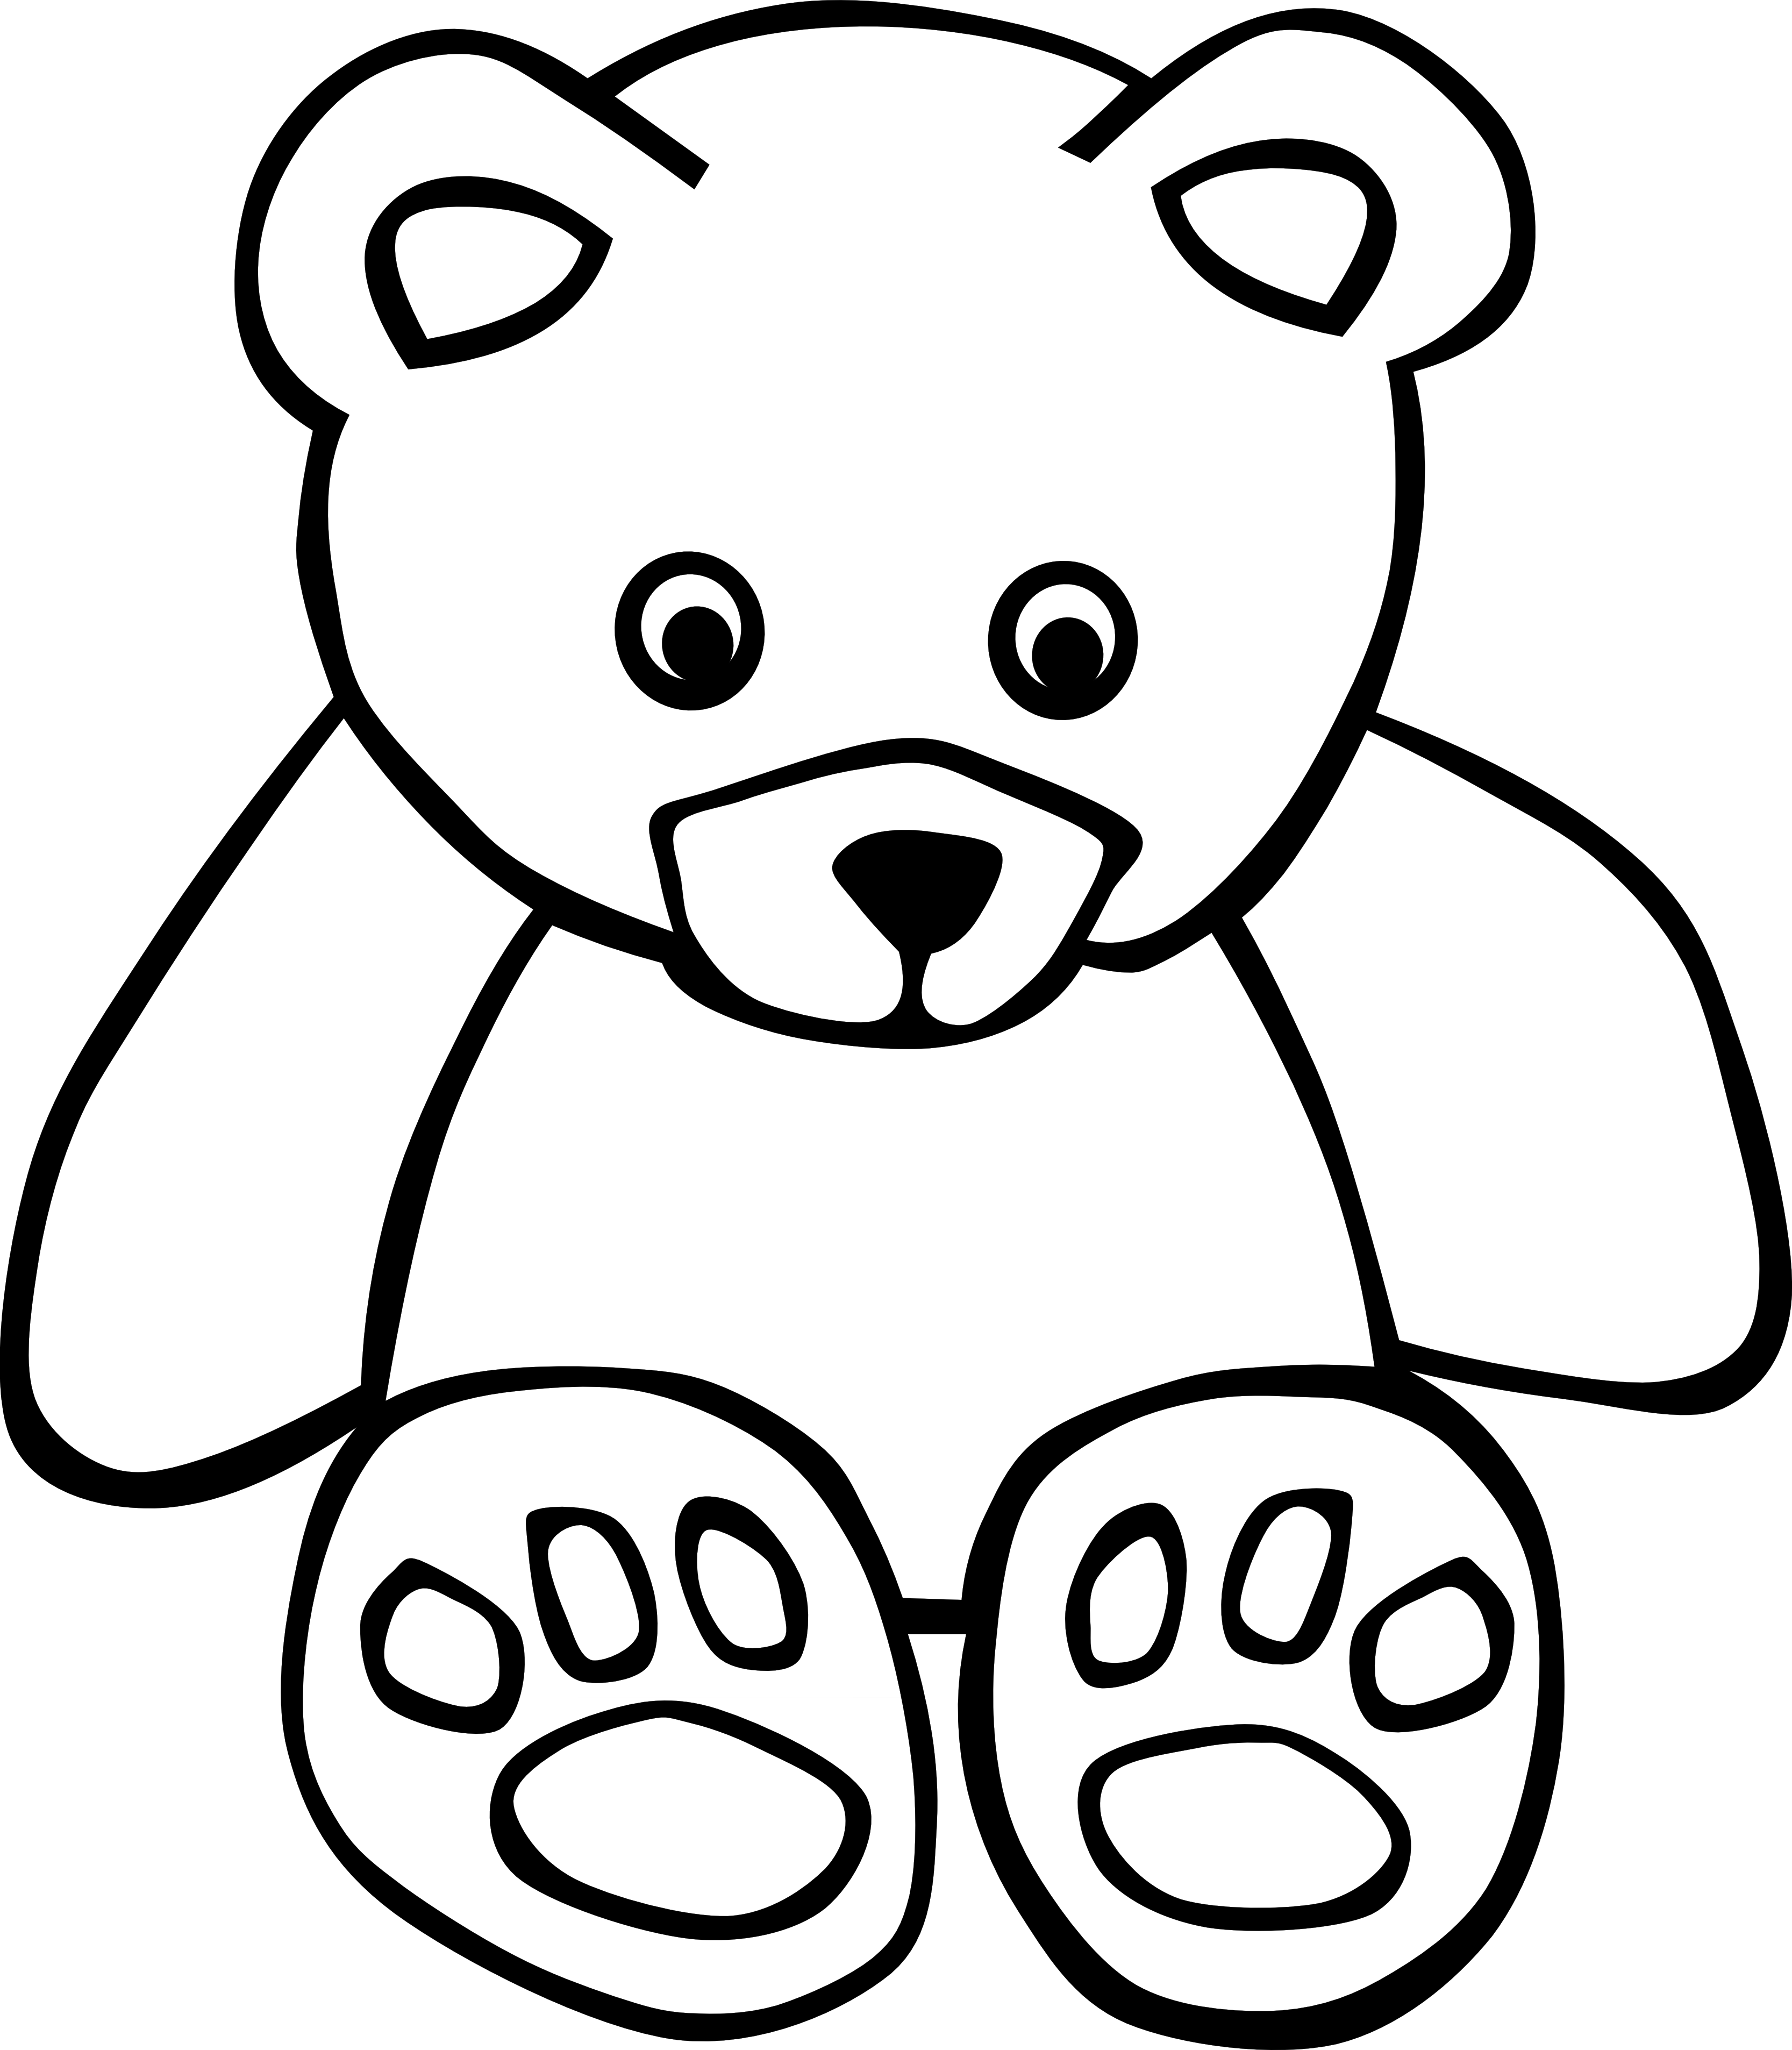 Teddy bear black.